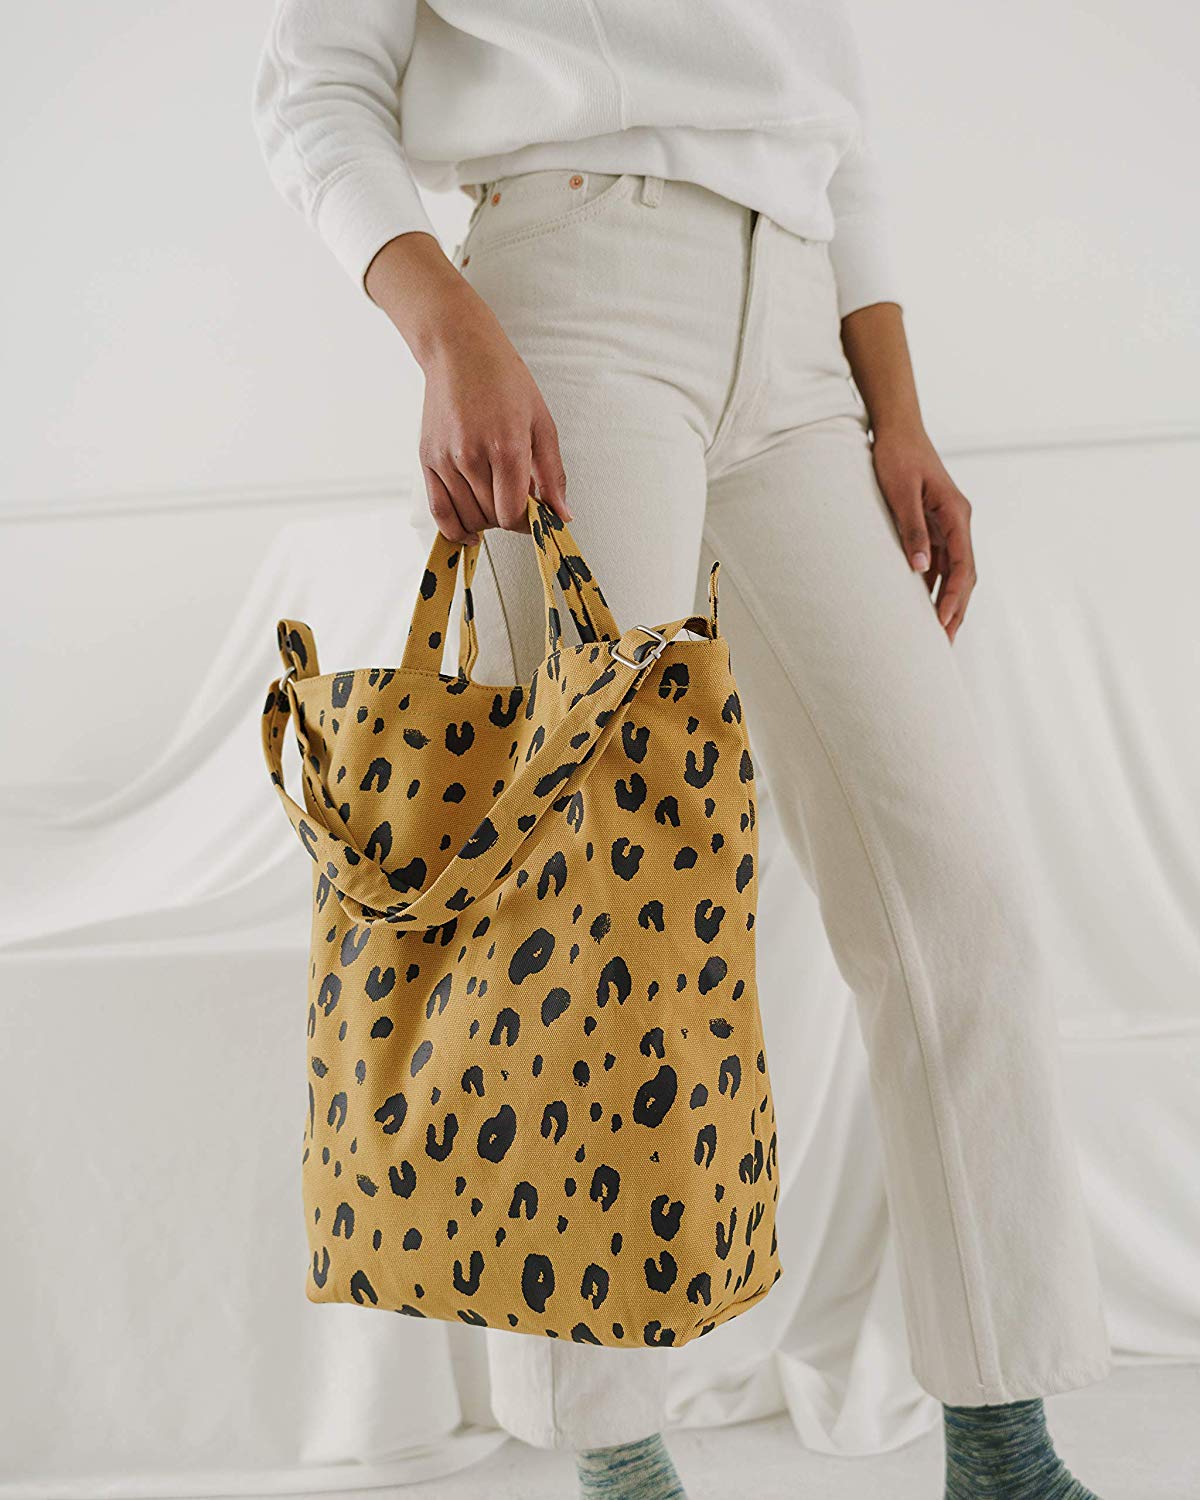 Baggu Leopard Tote Bag